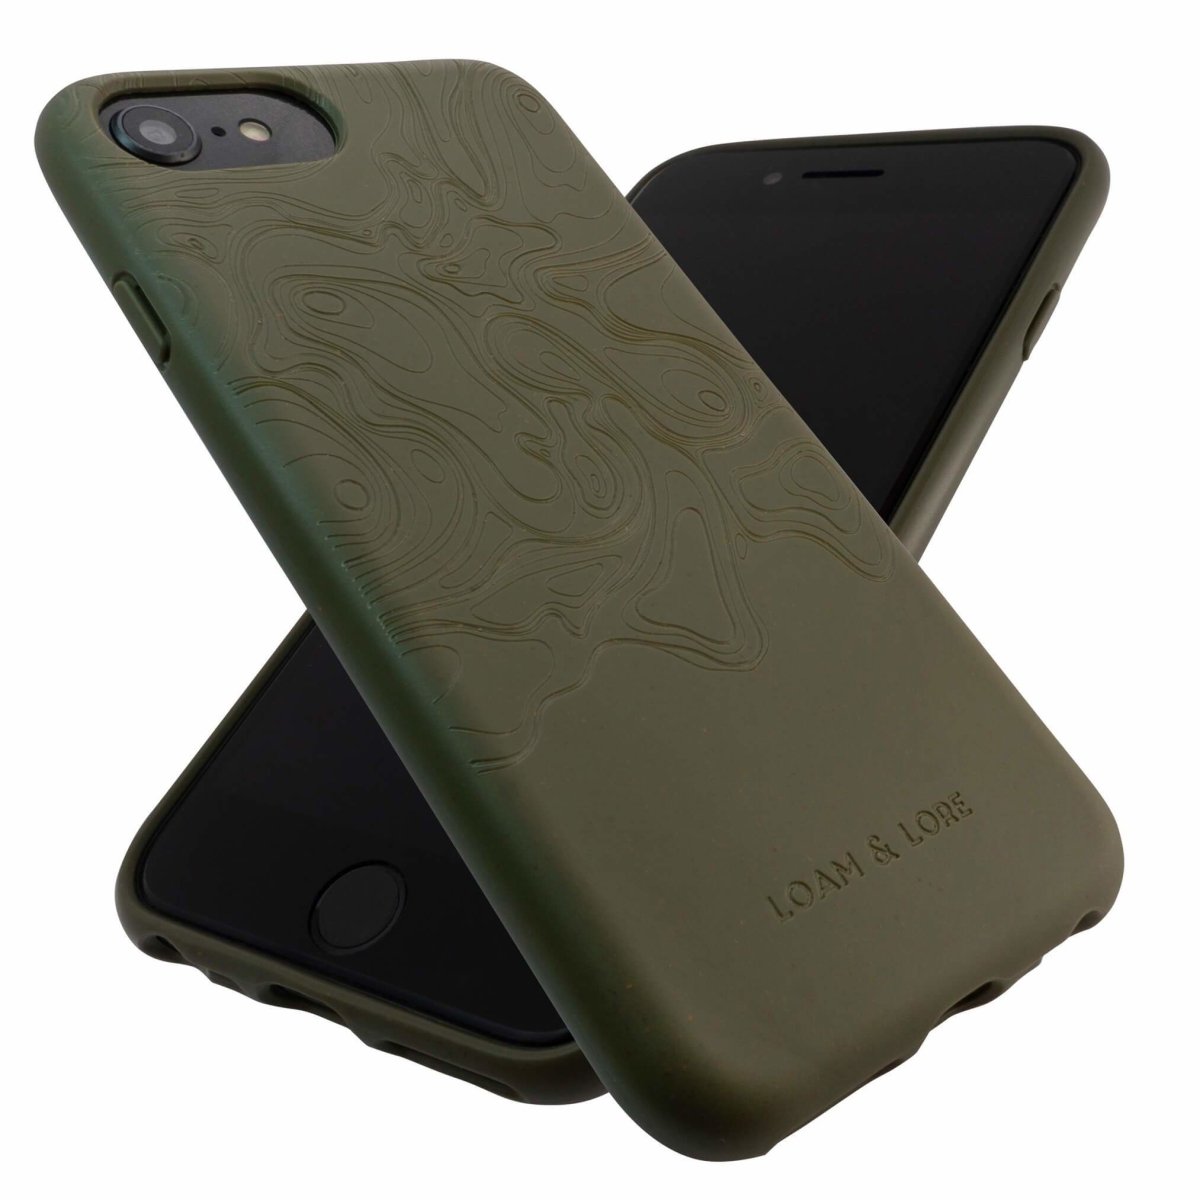 Eco Phone Case | iPhone SE 2020, iPhone 6, iPhone 7, iPhone 8 Compostable Case | Moss Green - Loam & Lore